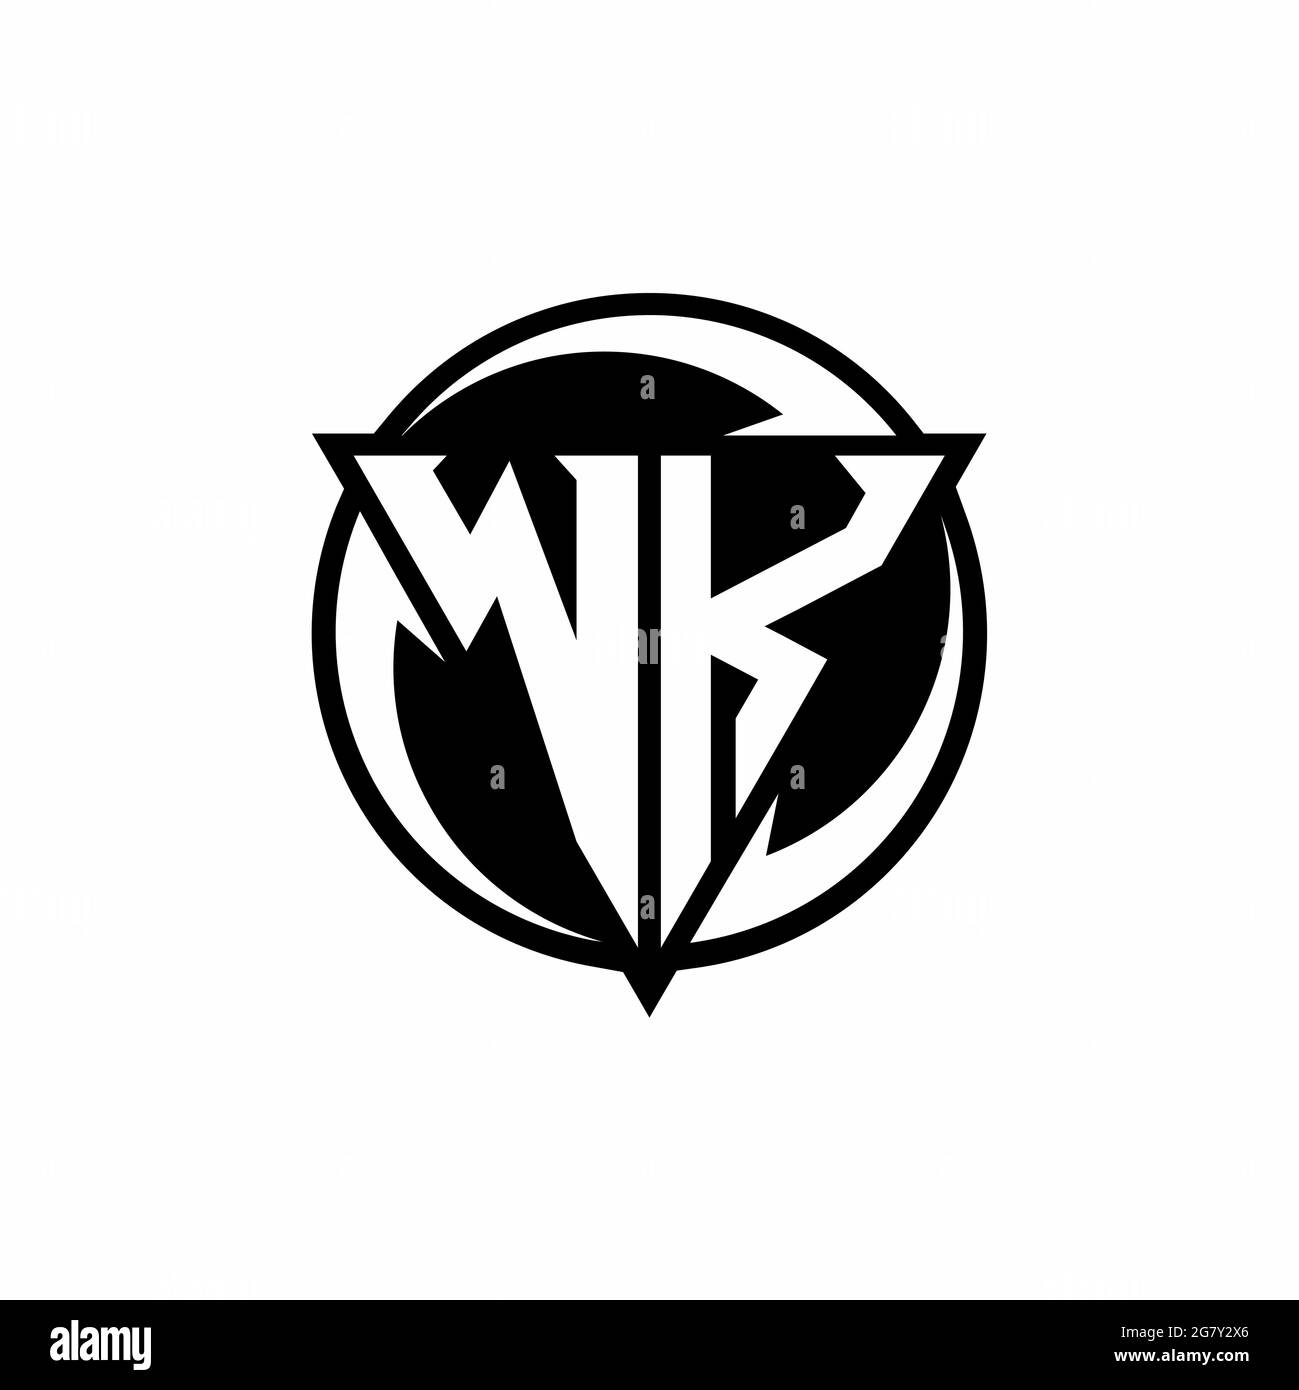 Wk logo Black and White Stock Photos & Images - Alamy